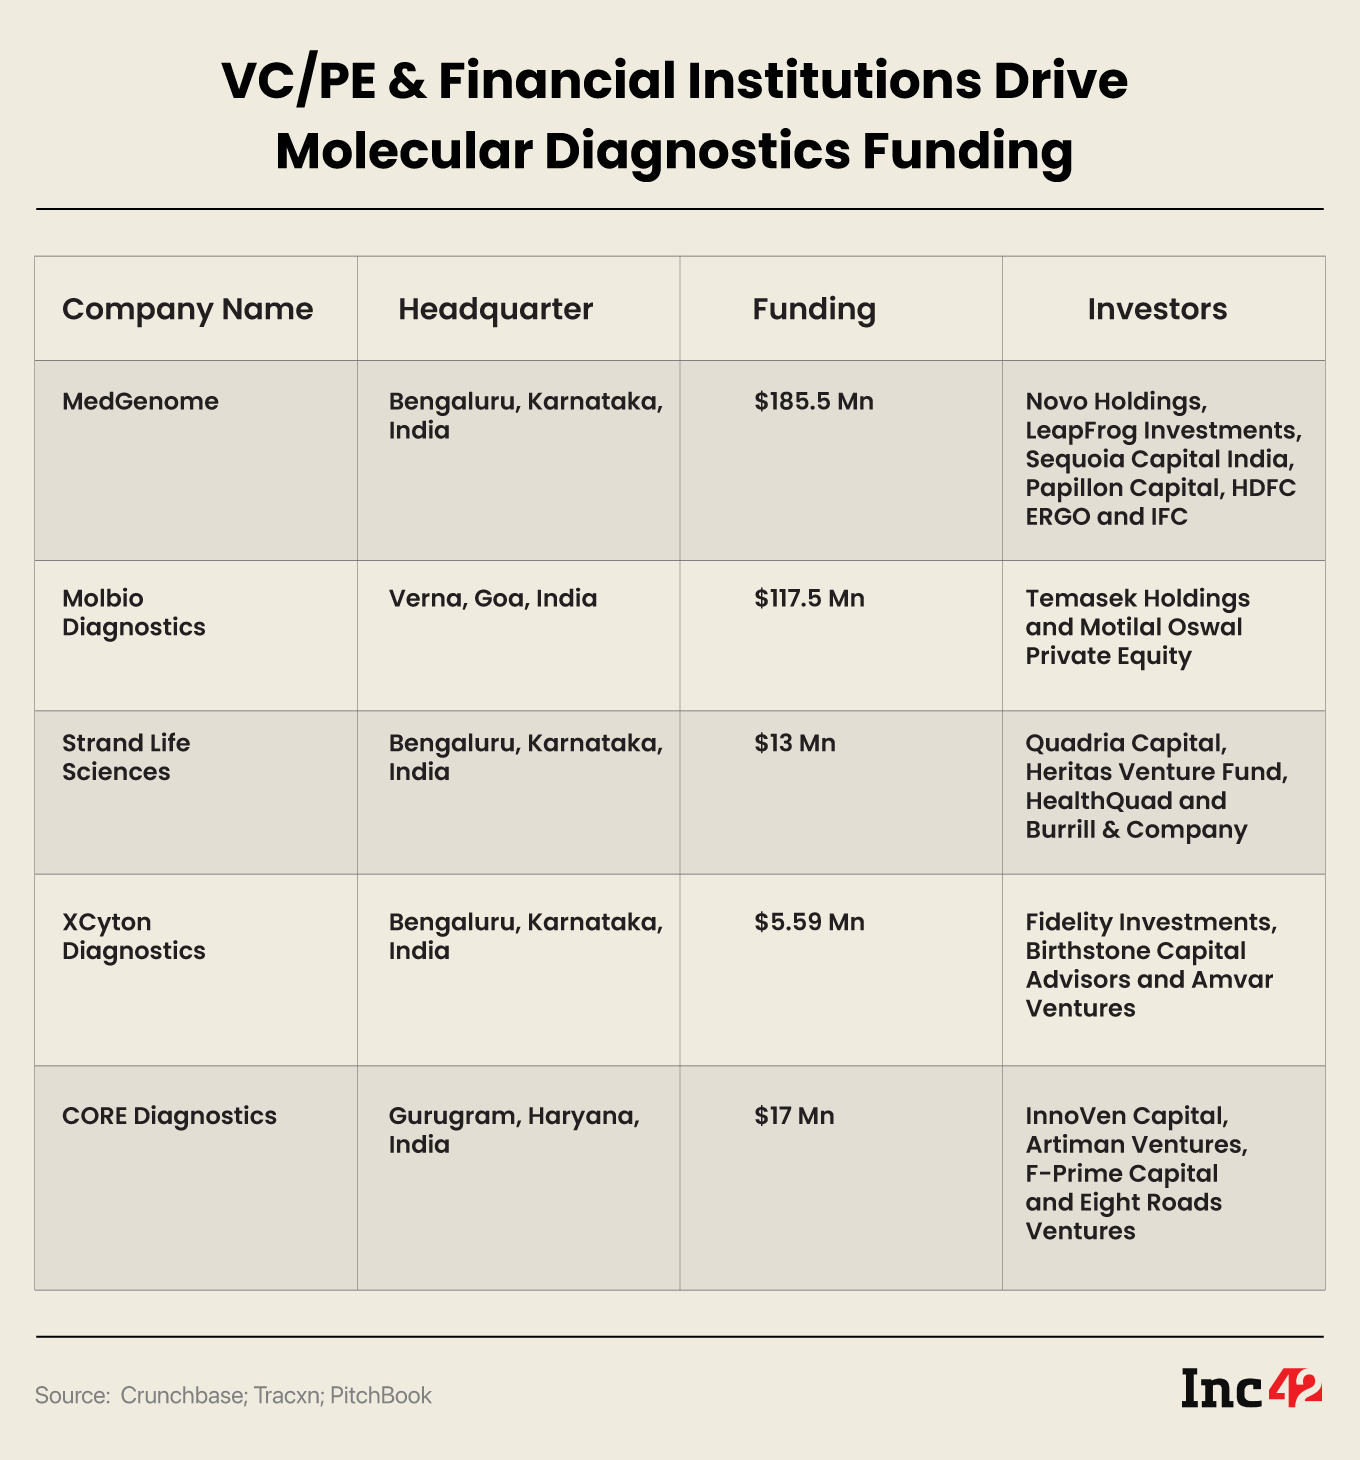 VC/PE & Financial Institutions Drive Molecular Diagnostics Funding 